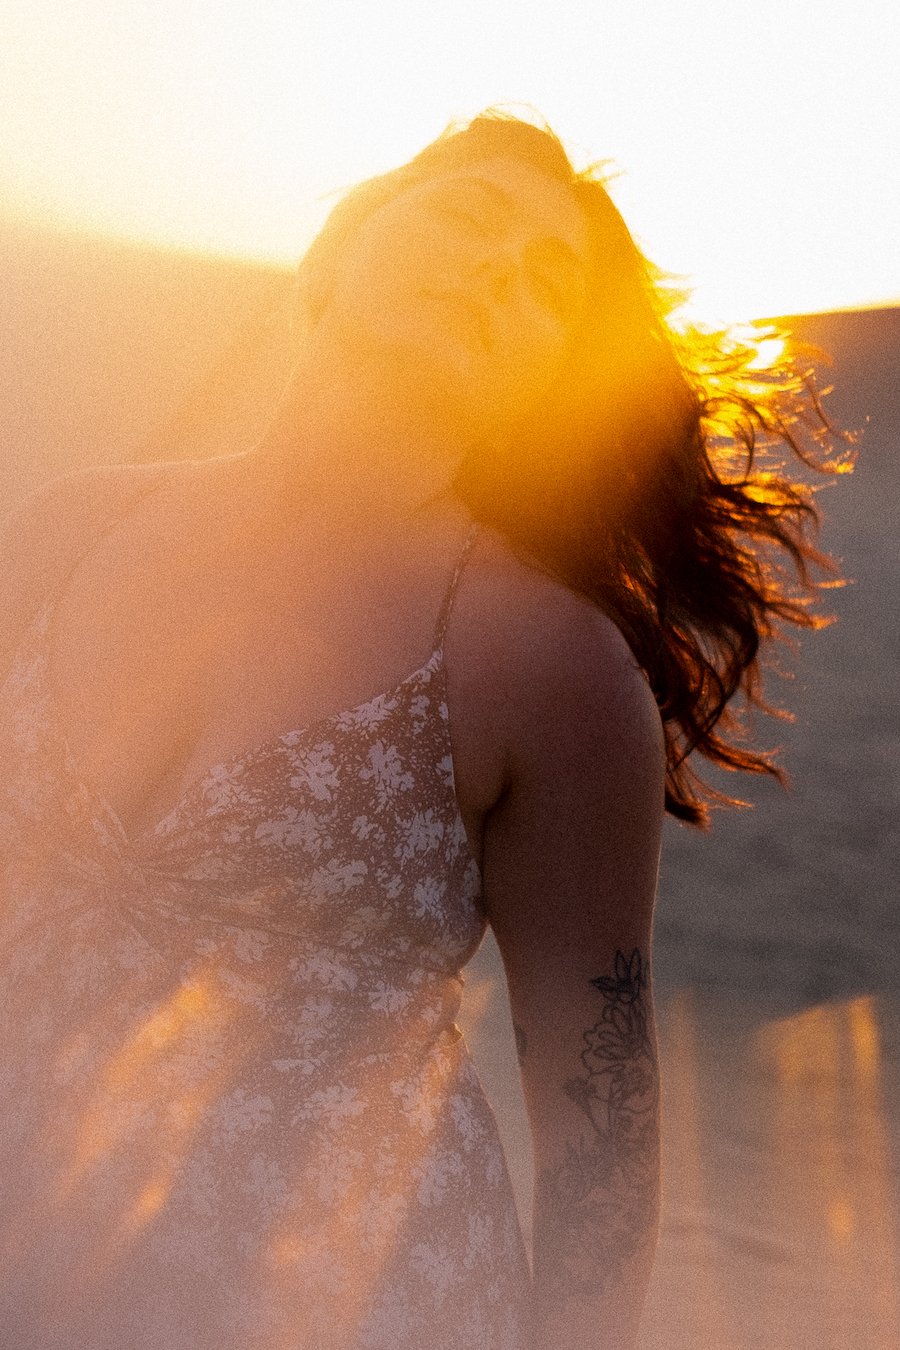 alyce-johnson-photo-blurred-sunset.jpg